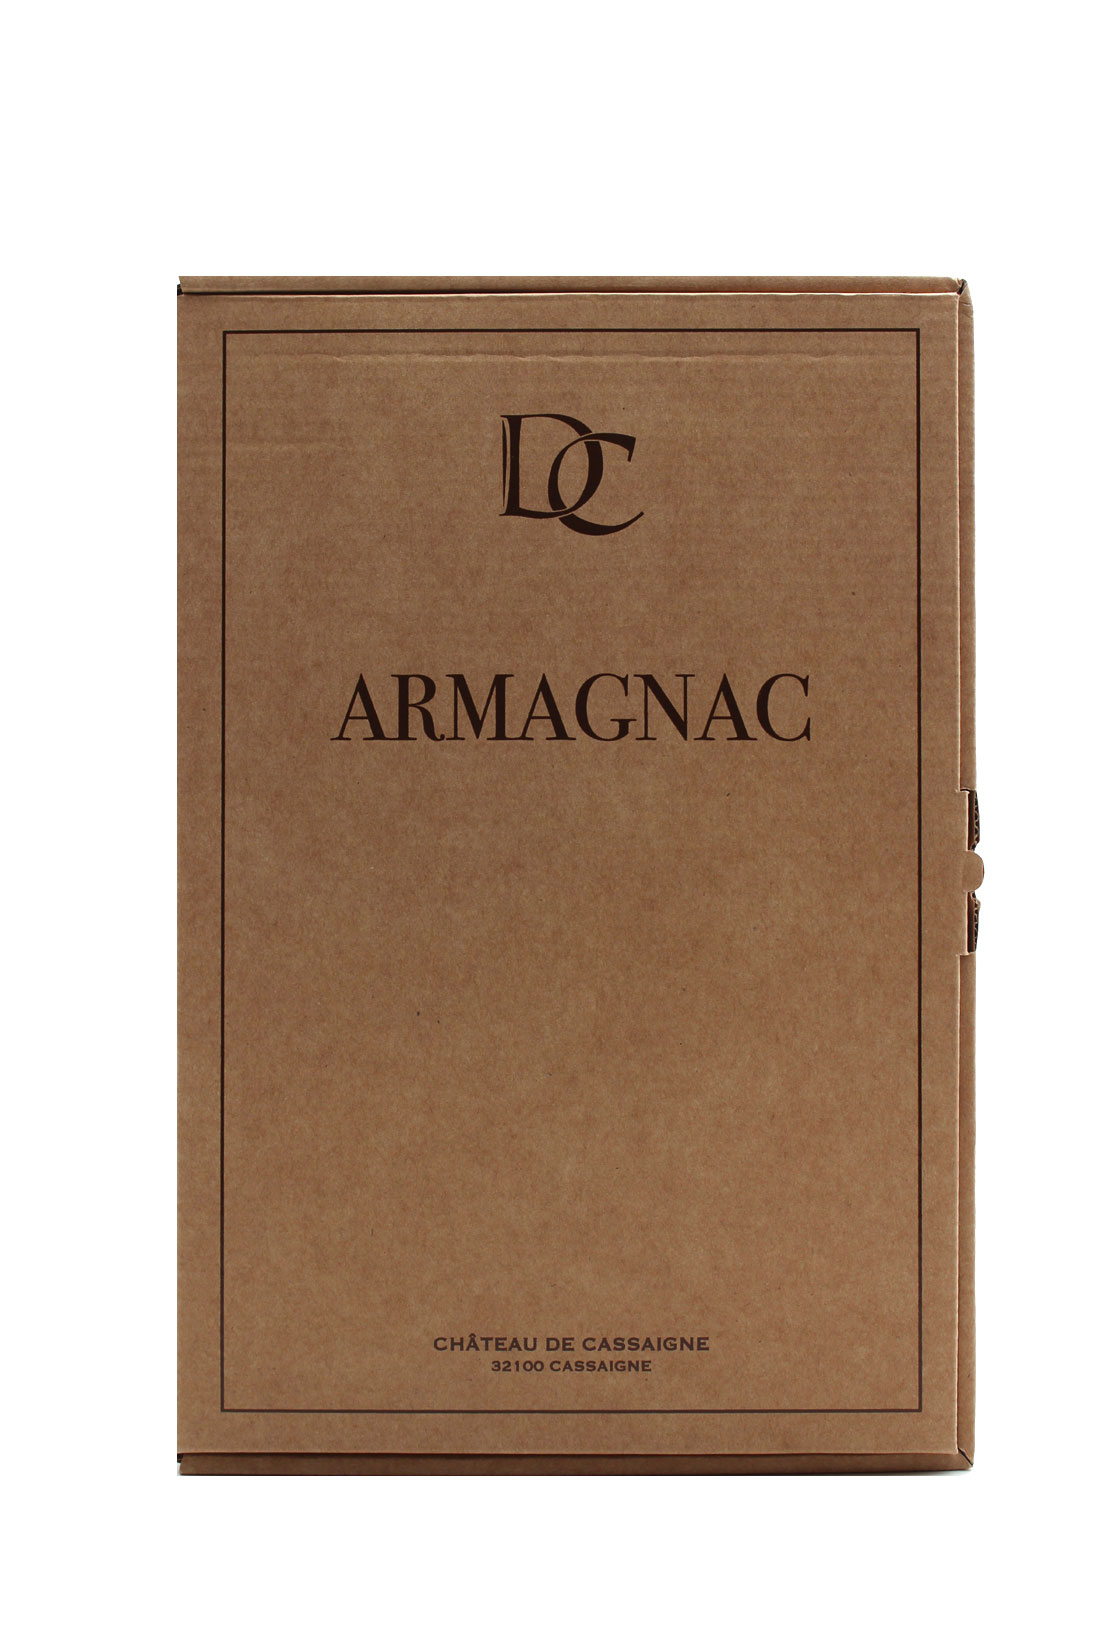 armagnac-vieille-res-1